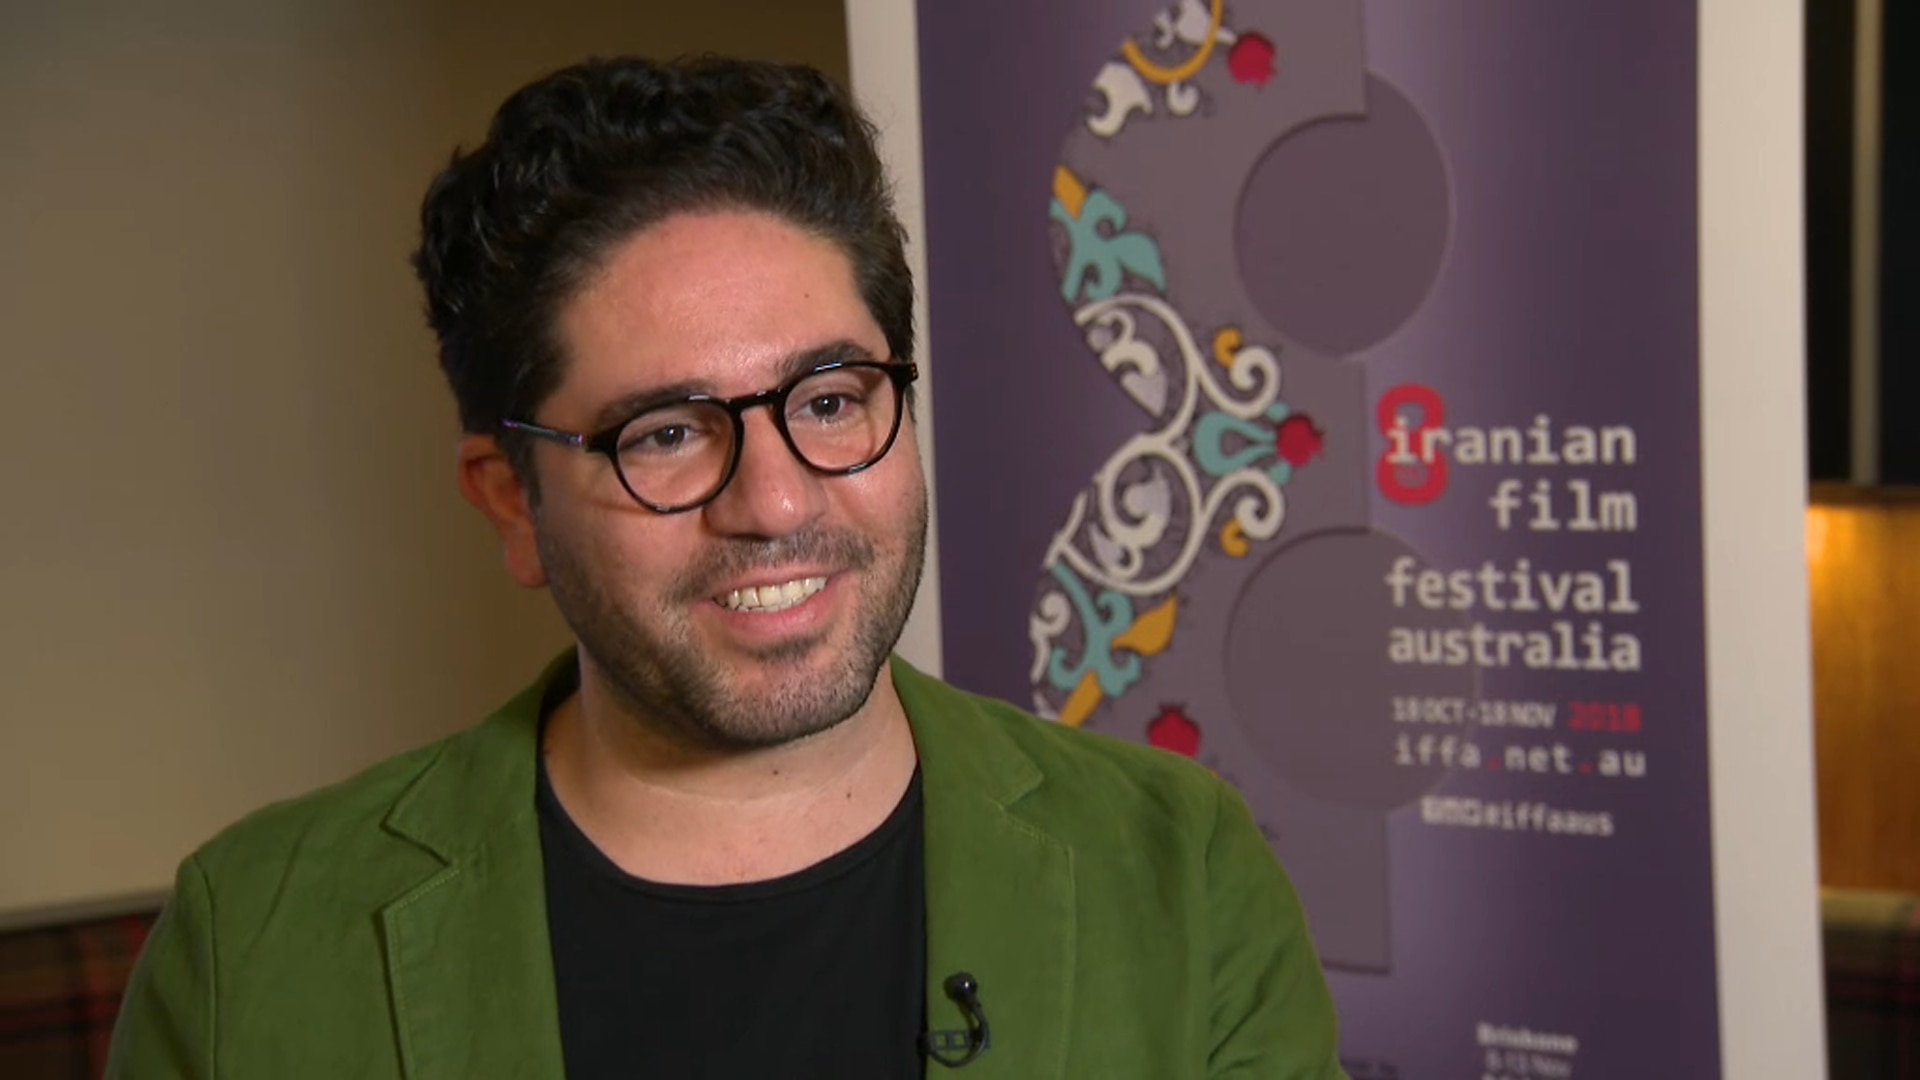 Iranian Film Festival Director, Armin Miladi.